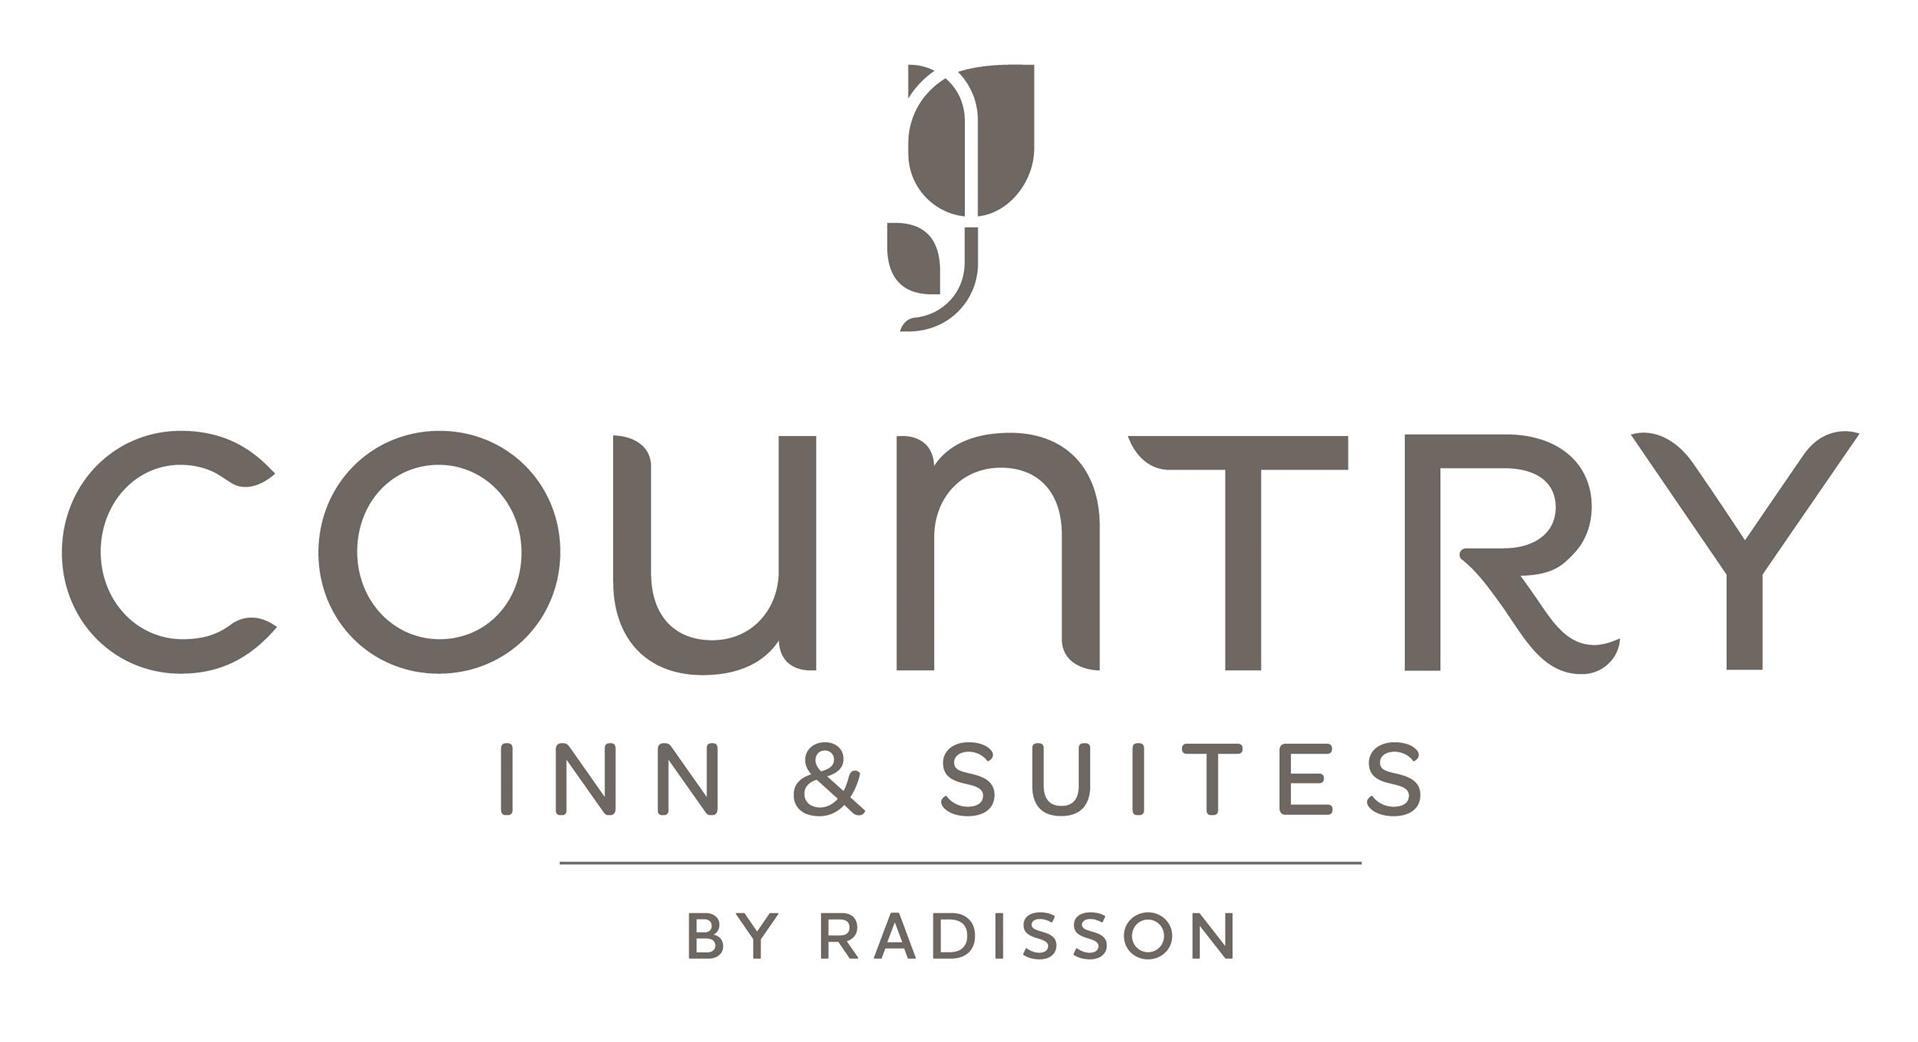 Country Inn & Suites by Radisson, Vallejo Napa Valley, CA in Vallejo, CA